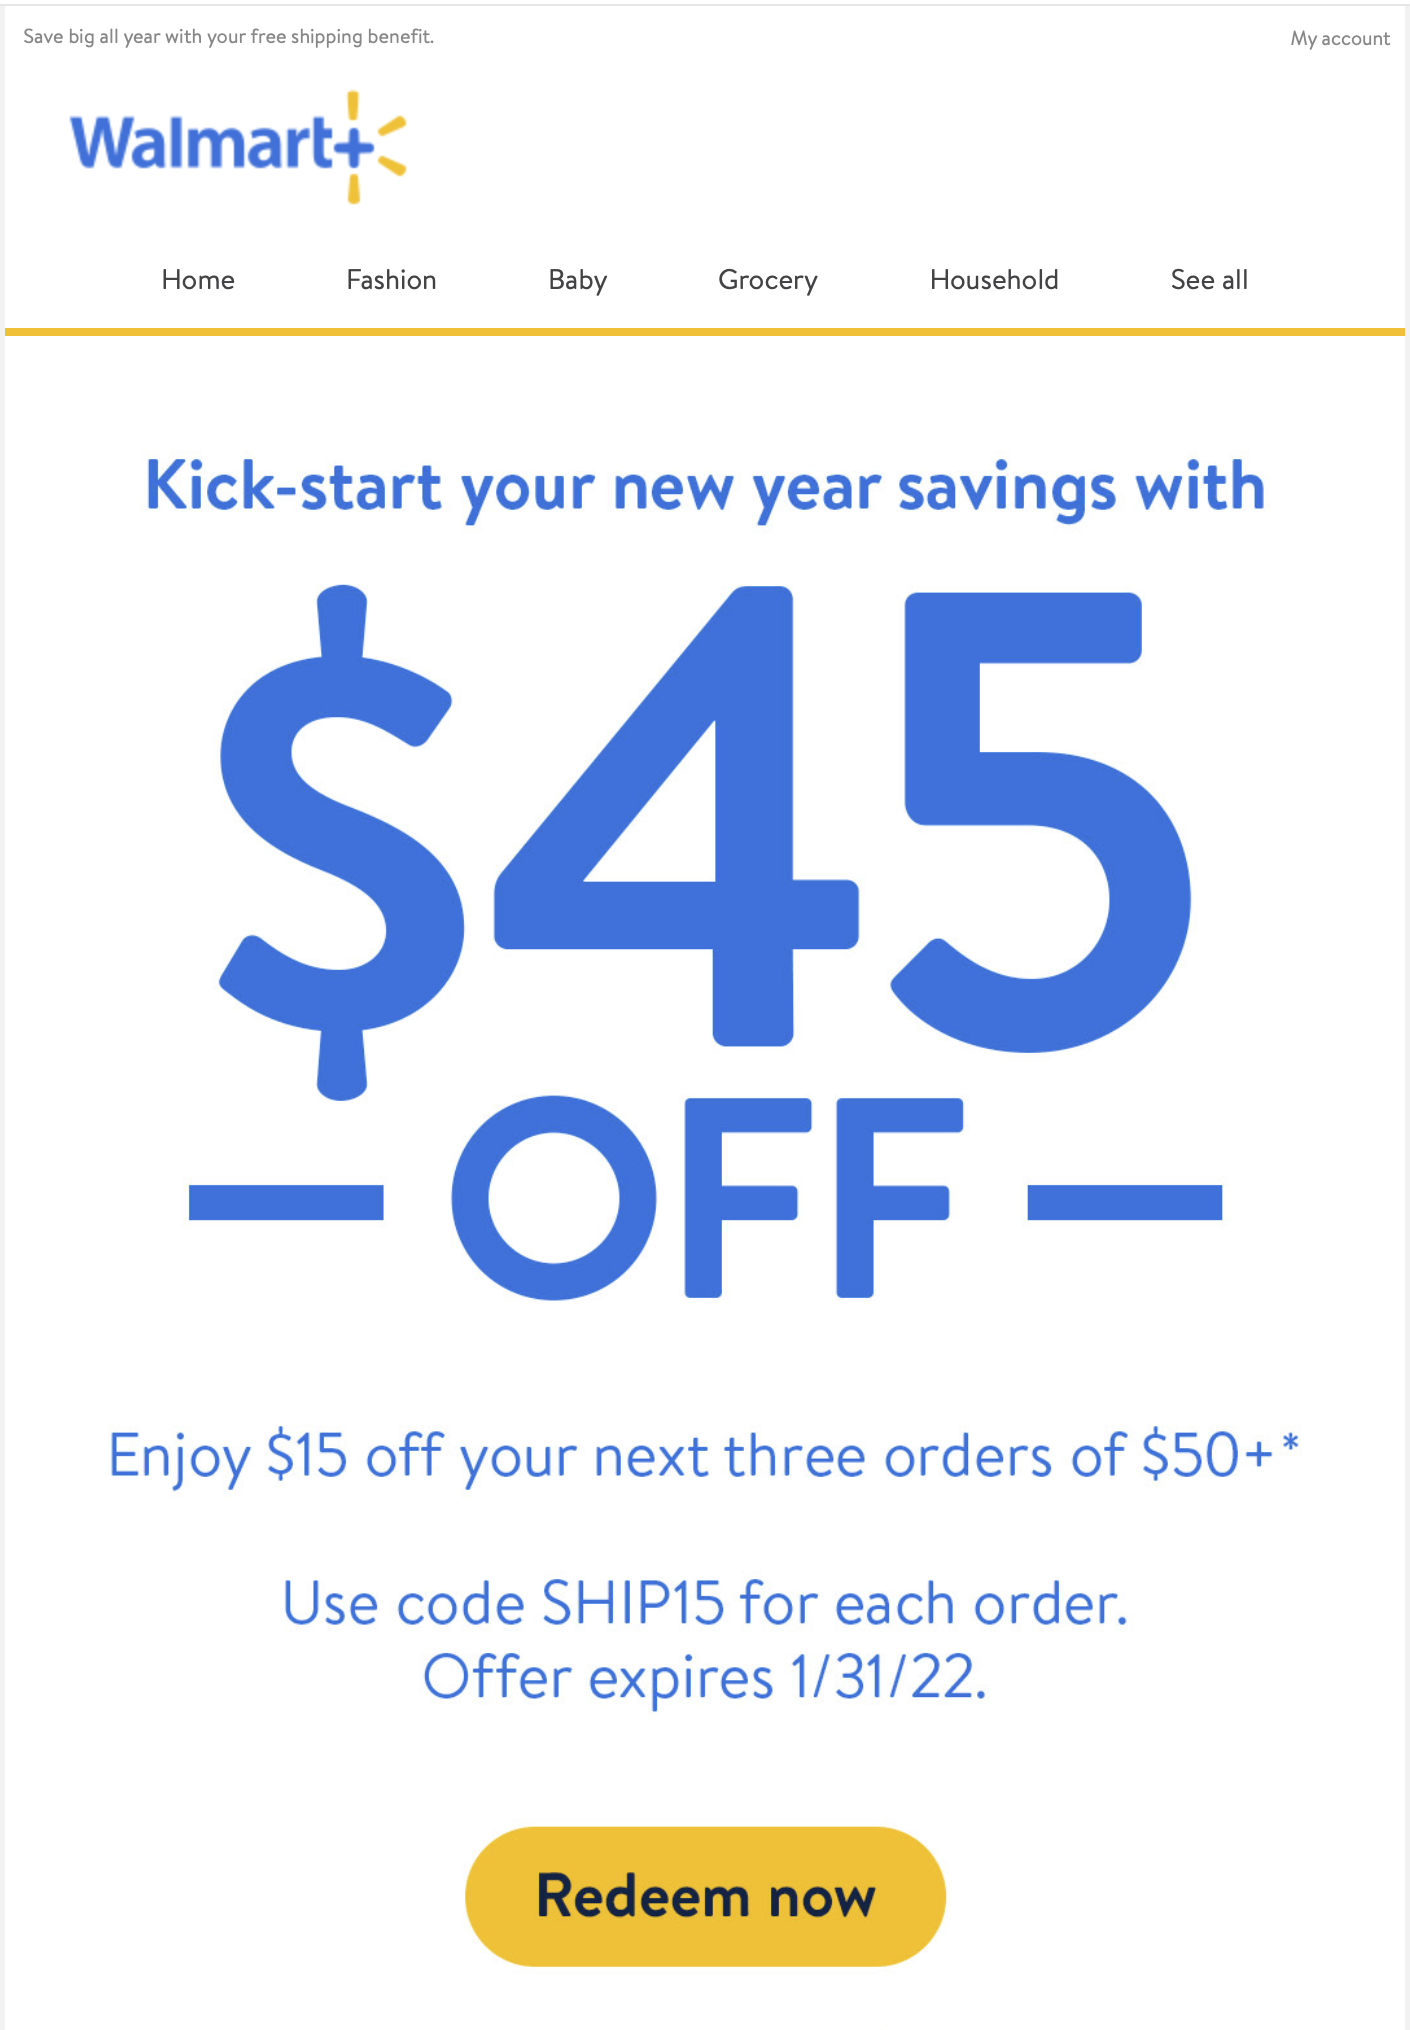 Walmart+ members - Enjoy $15 off your next three orders of $50+ (YMMV)